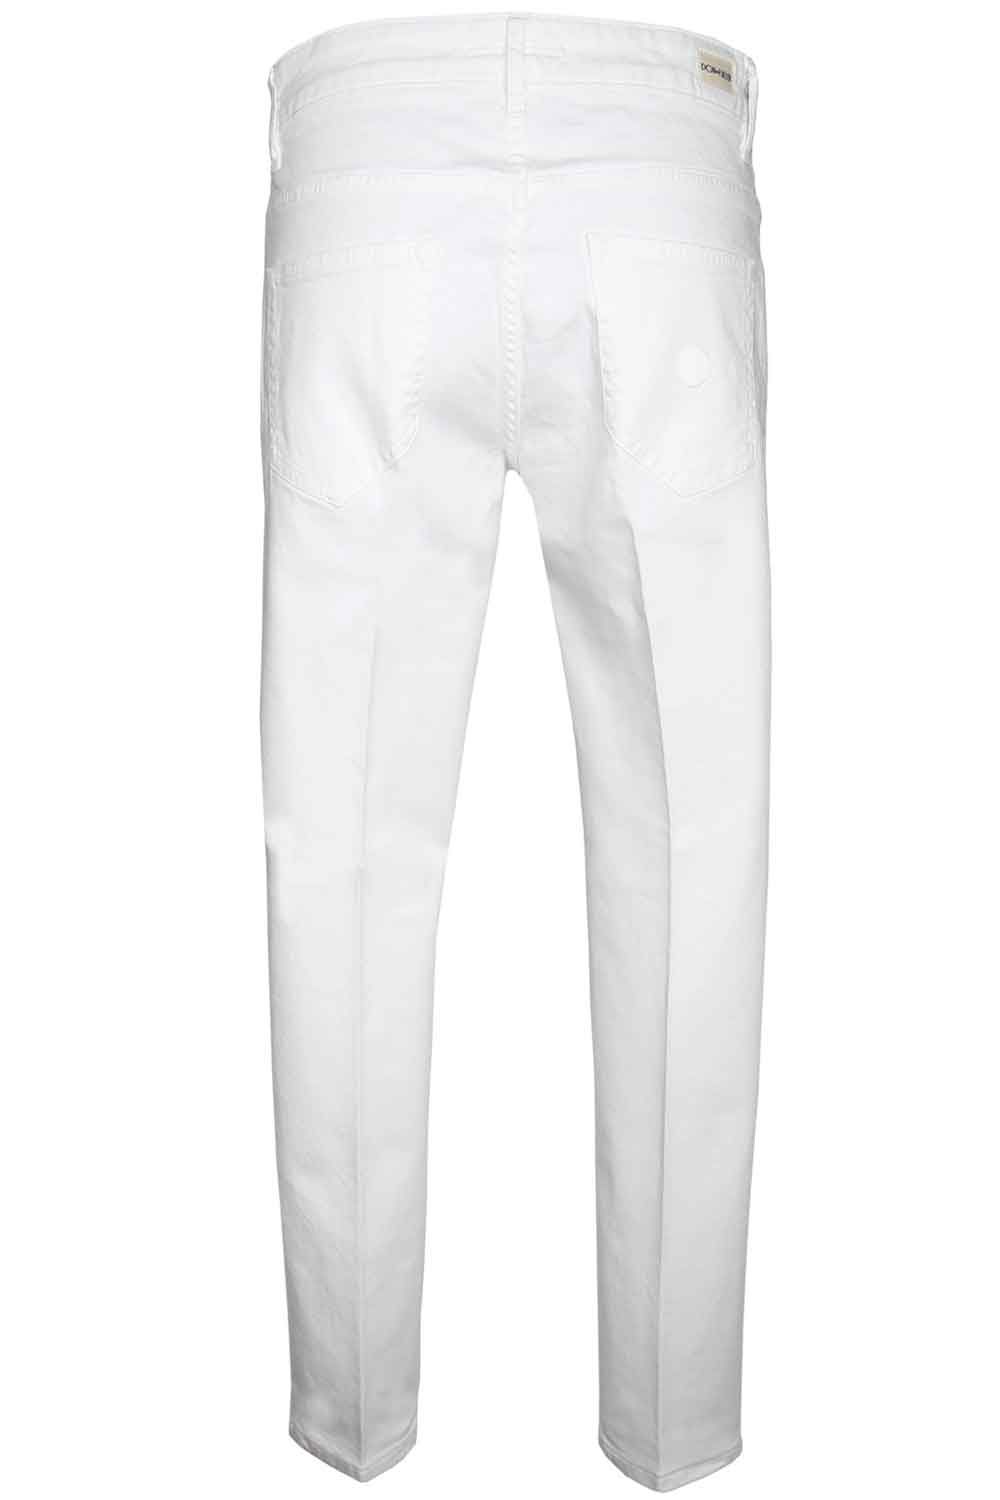 Pantalone bianco- DON THE FULLER Jeans DON THE FULLER   